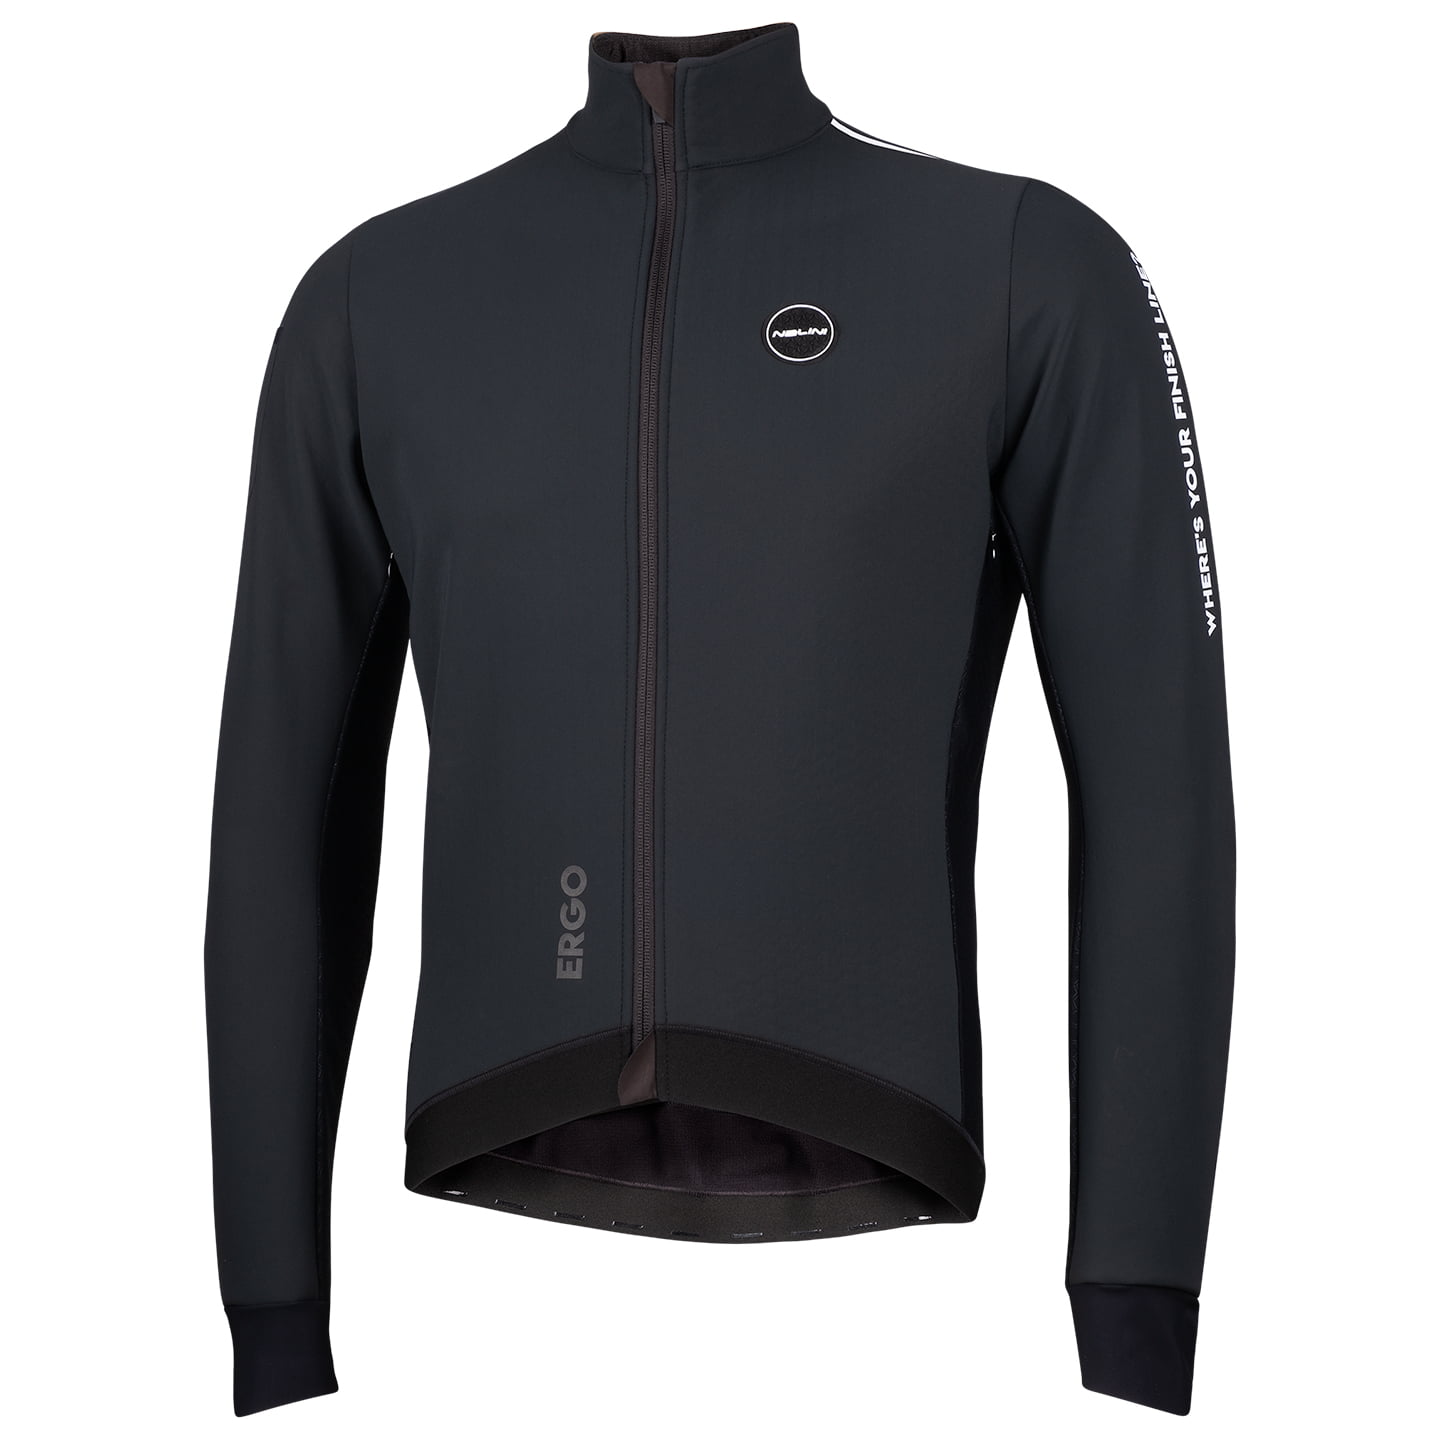 NALINI Winter Jacket New Ergo Warm Thermal Jacket, for men, size M, Cycle jacket, Cycling clothing